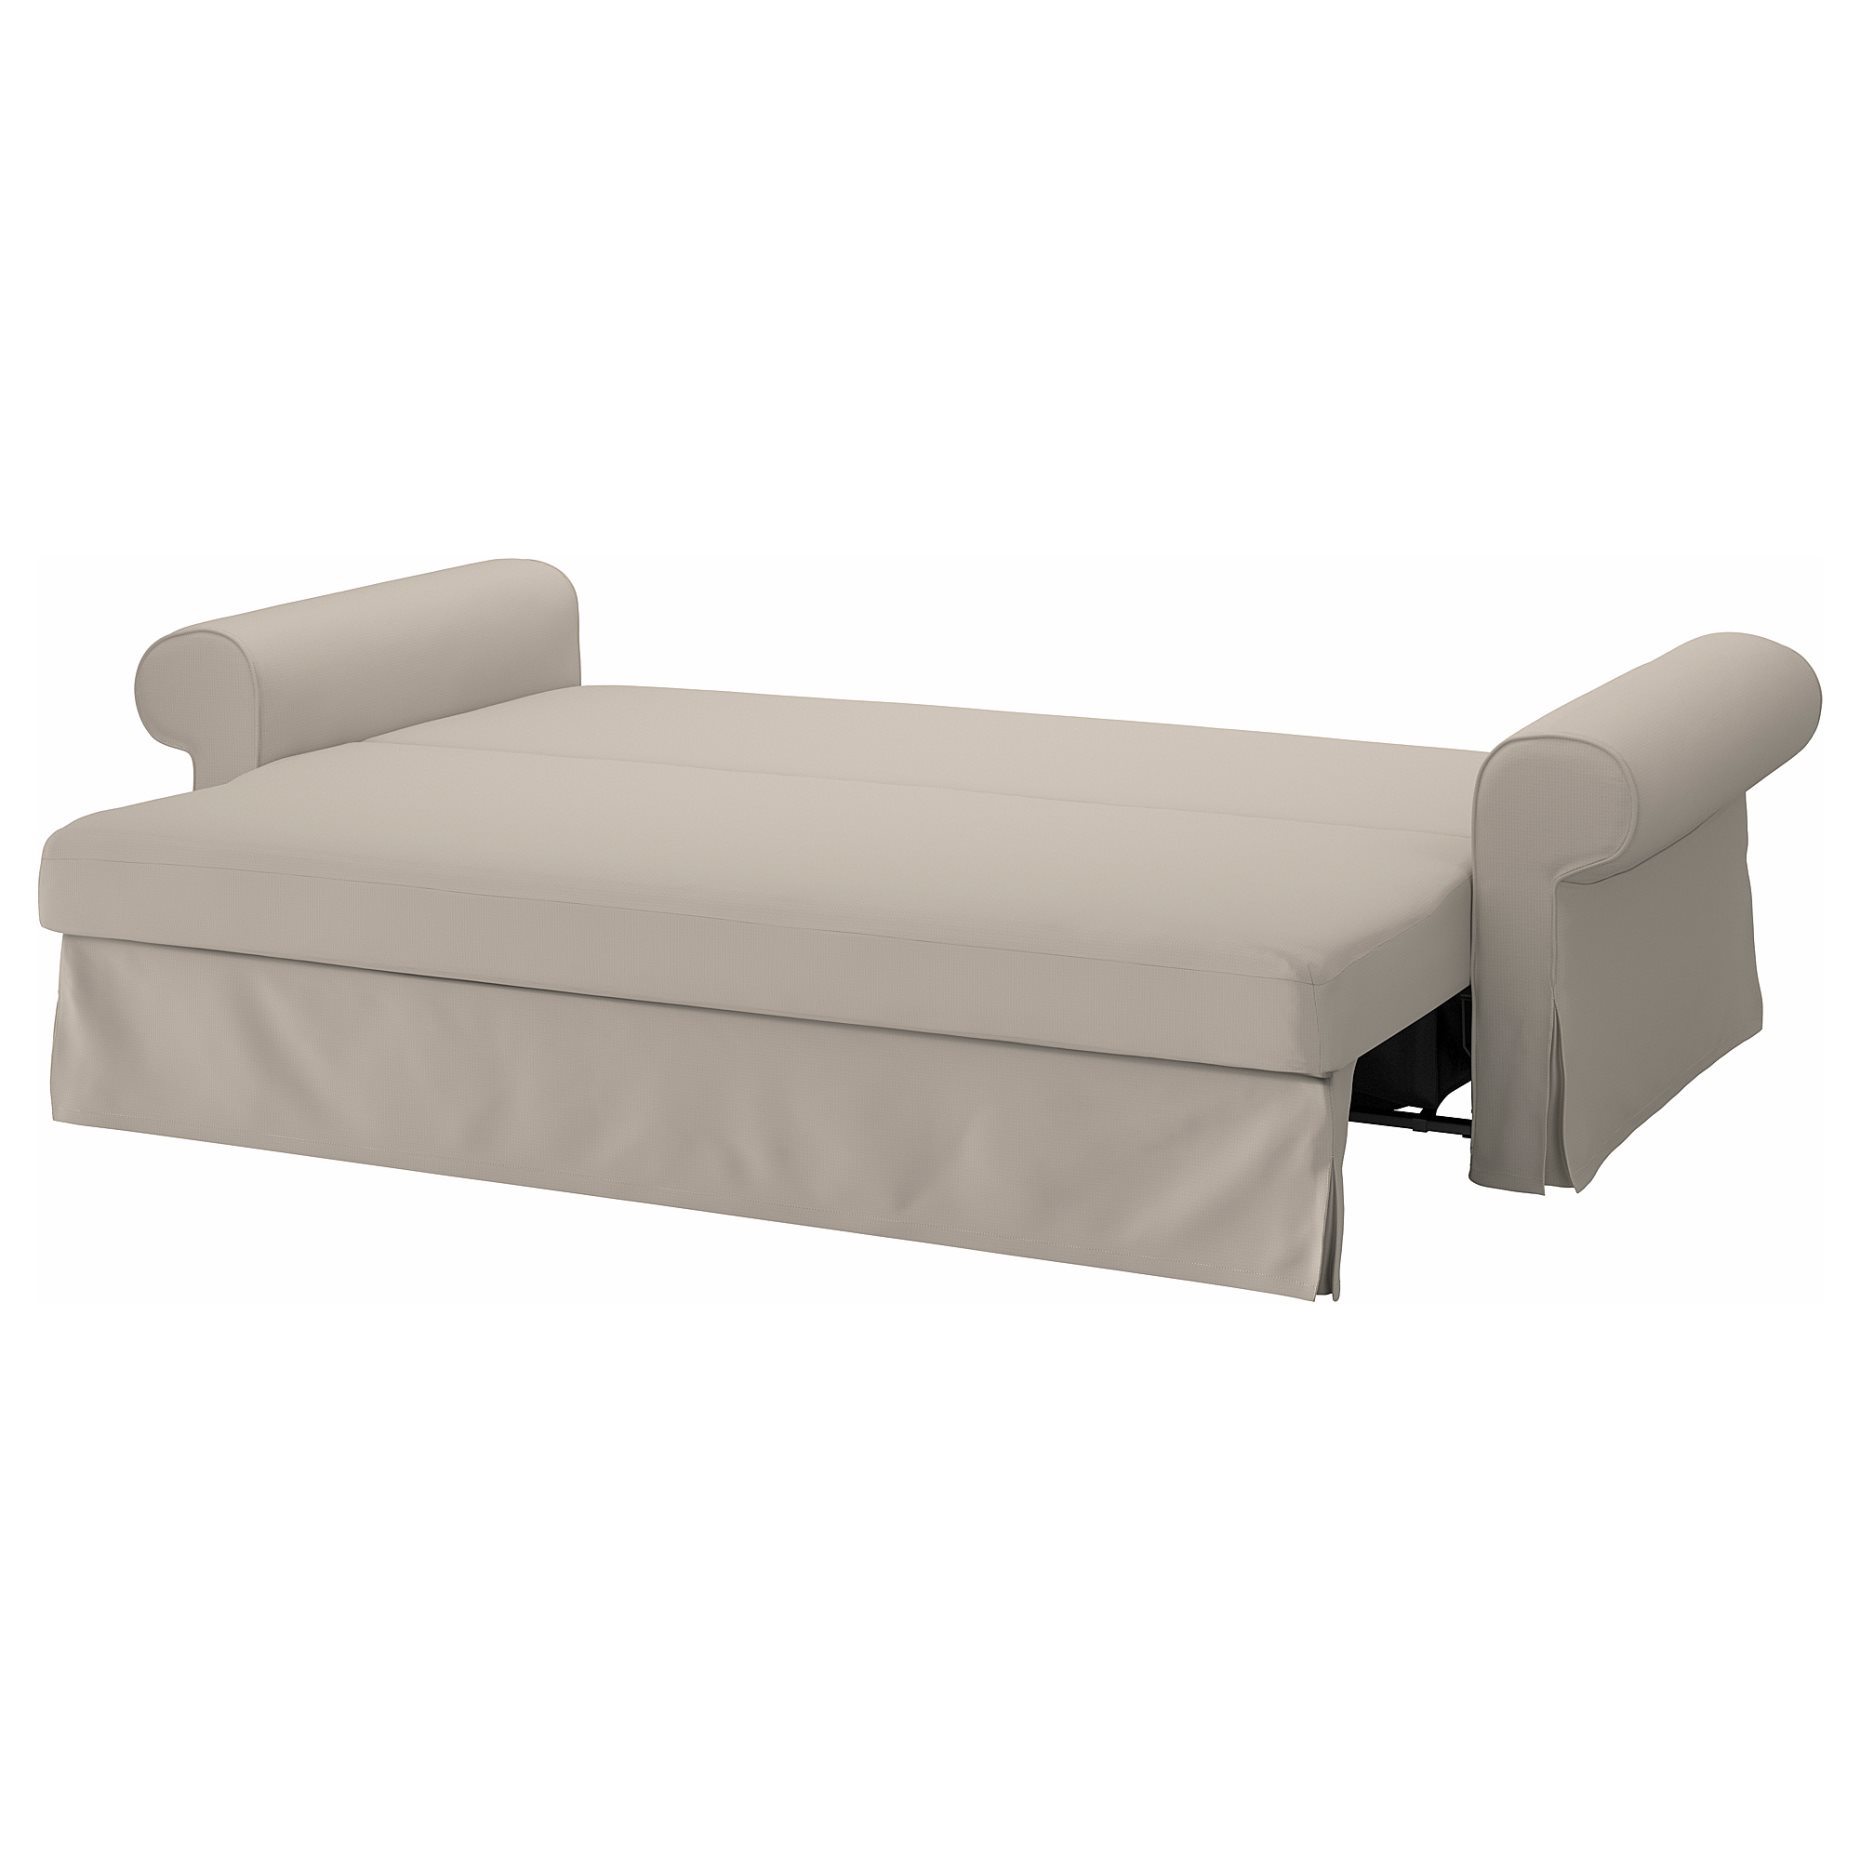 VRETSTORP, τριθέσιος καναπές-κρεβάτι, 493.201.23